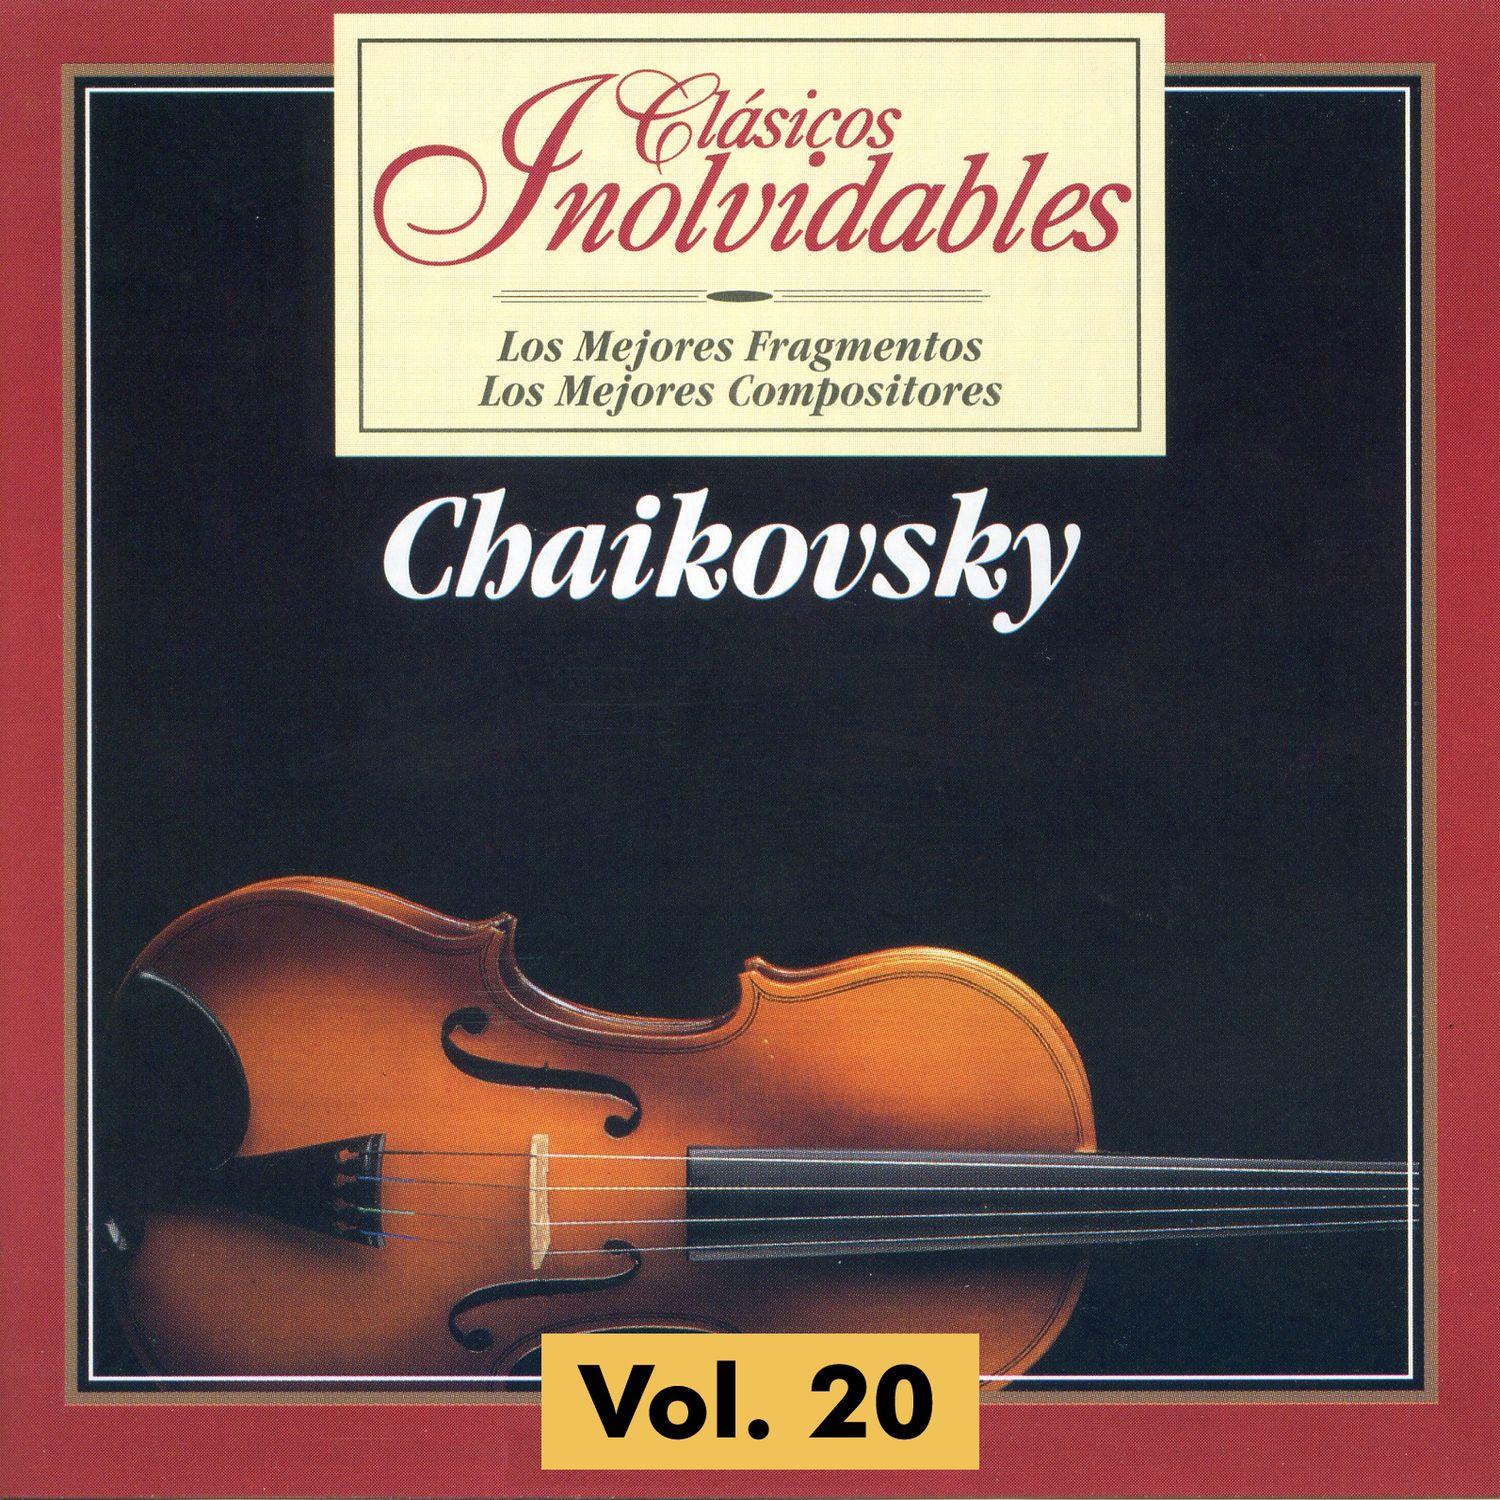 Cla sicos Inolvidables Vol. 20, Chaikovsky